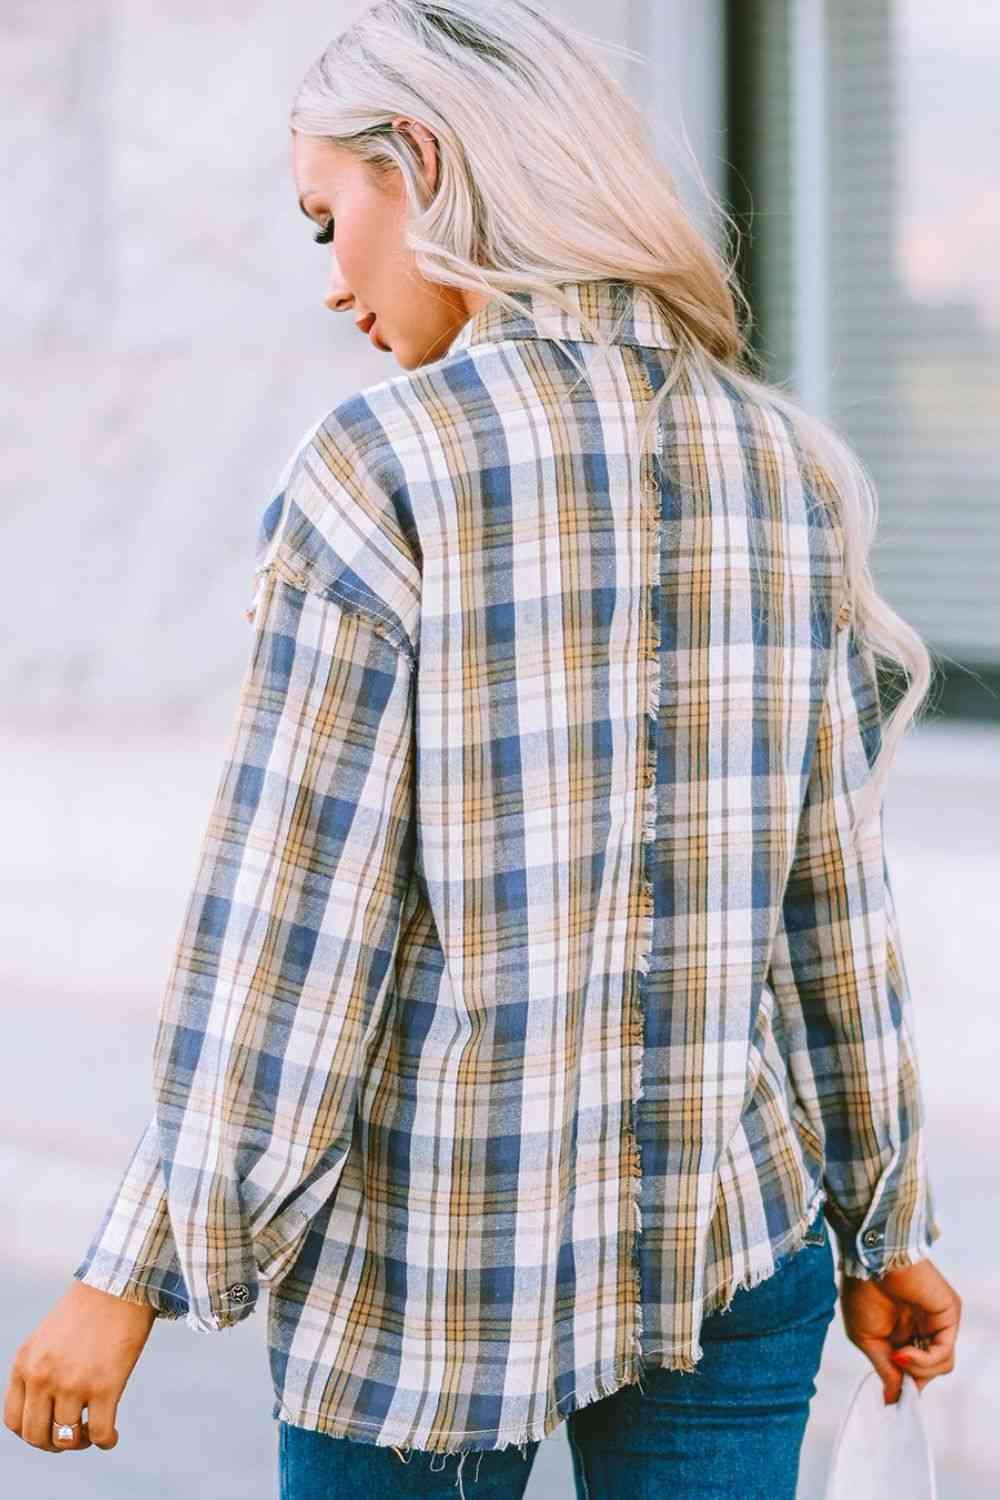 a woman walking down the street wearing a plaid shirt